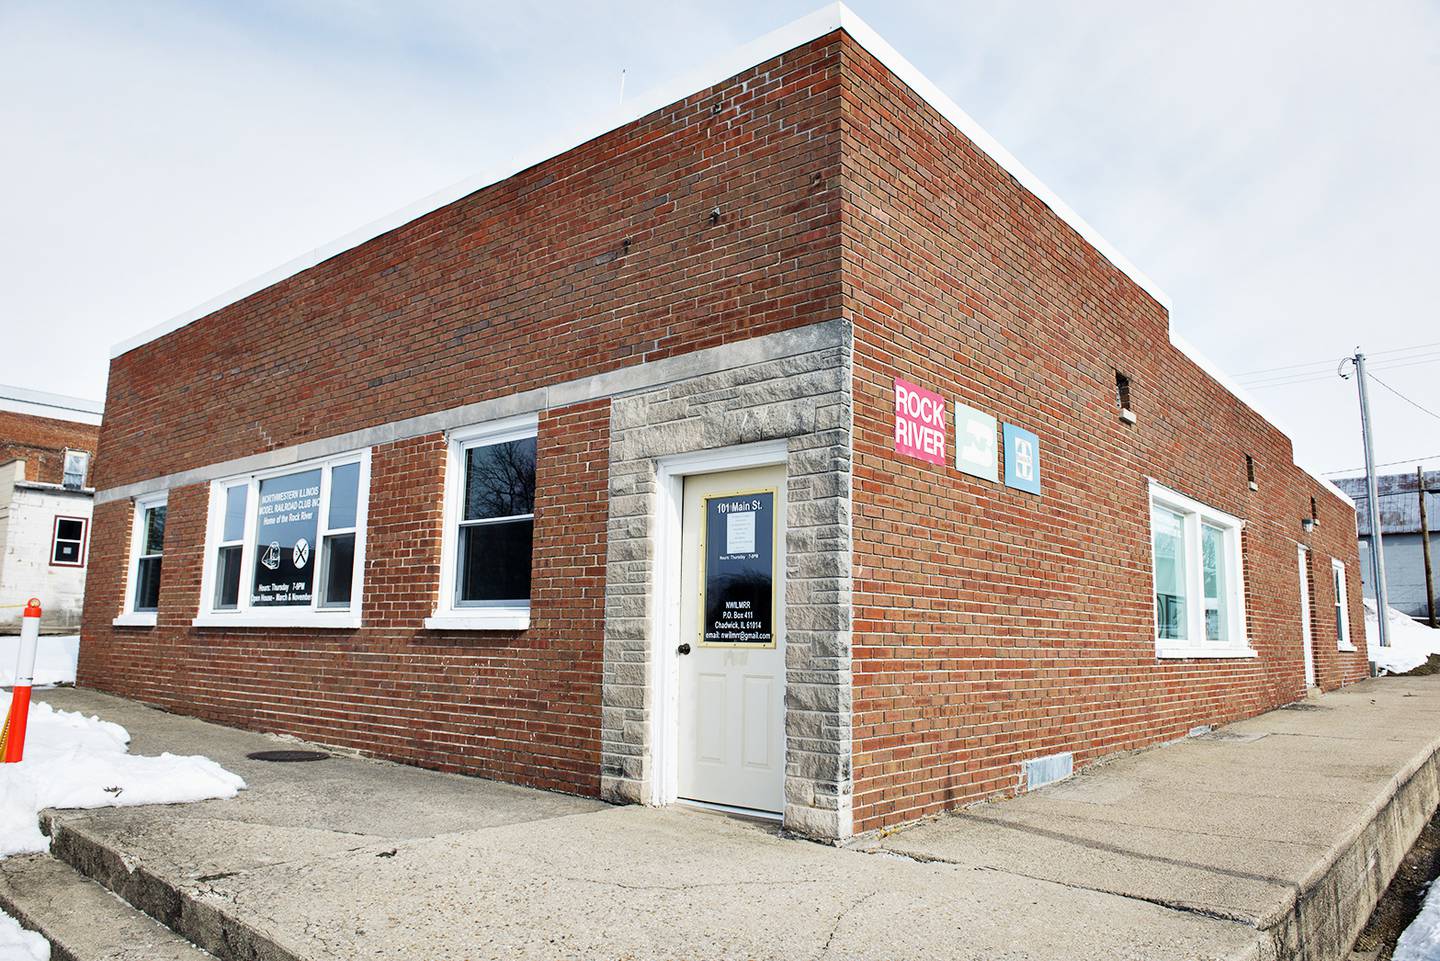 The Northwestern Illinois Model Railroad Club headquarters is at 101 Main Street, Chadwick, IL 61014.